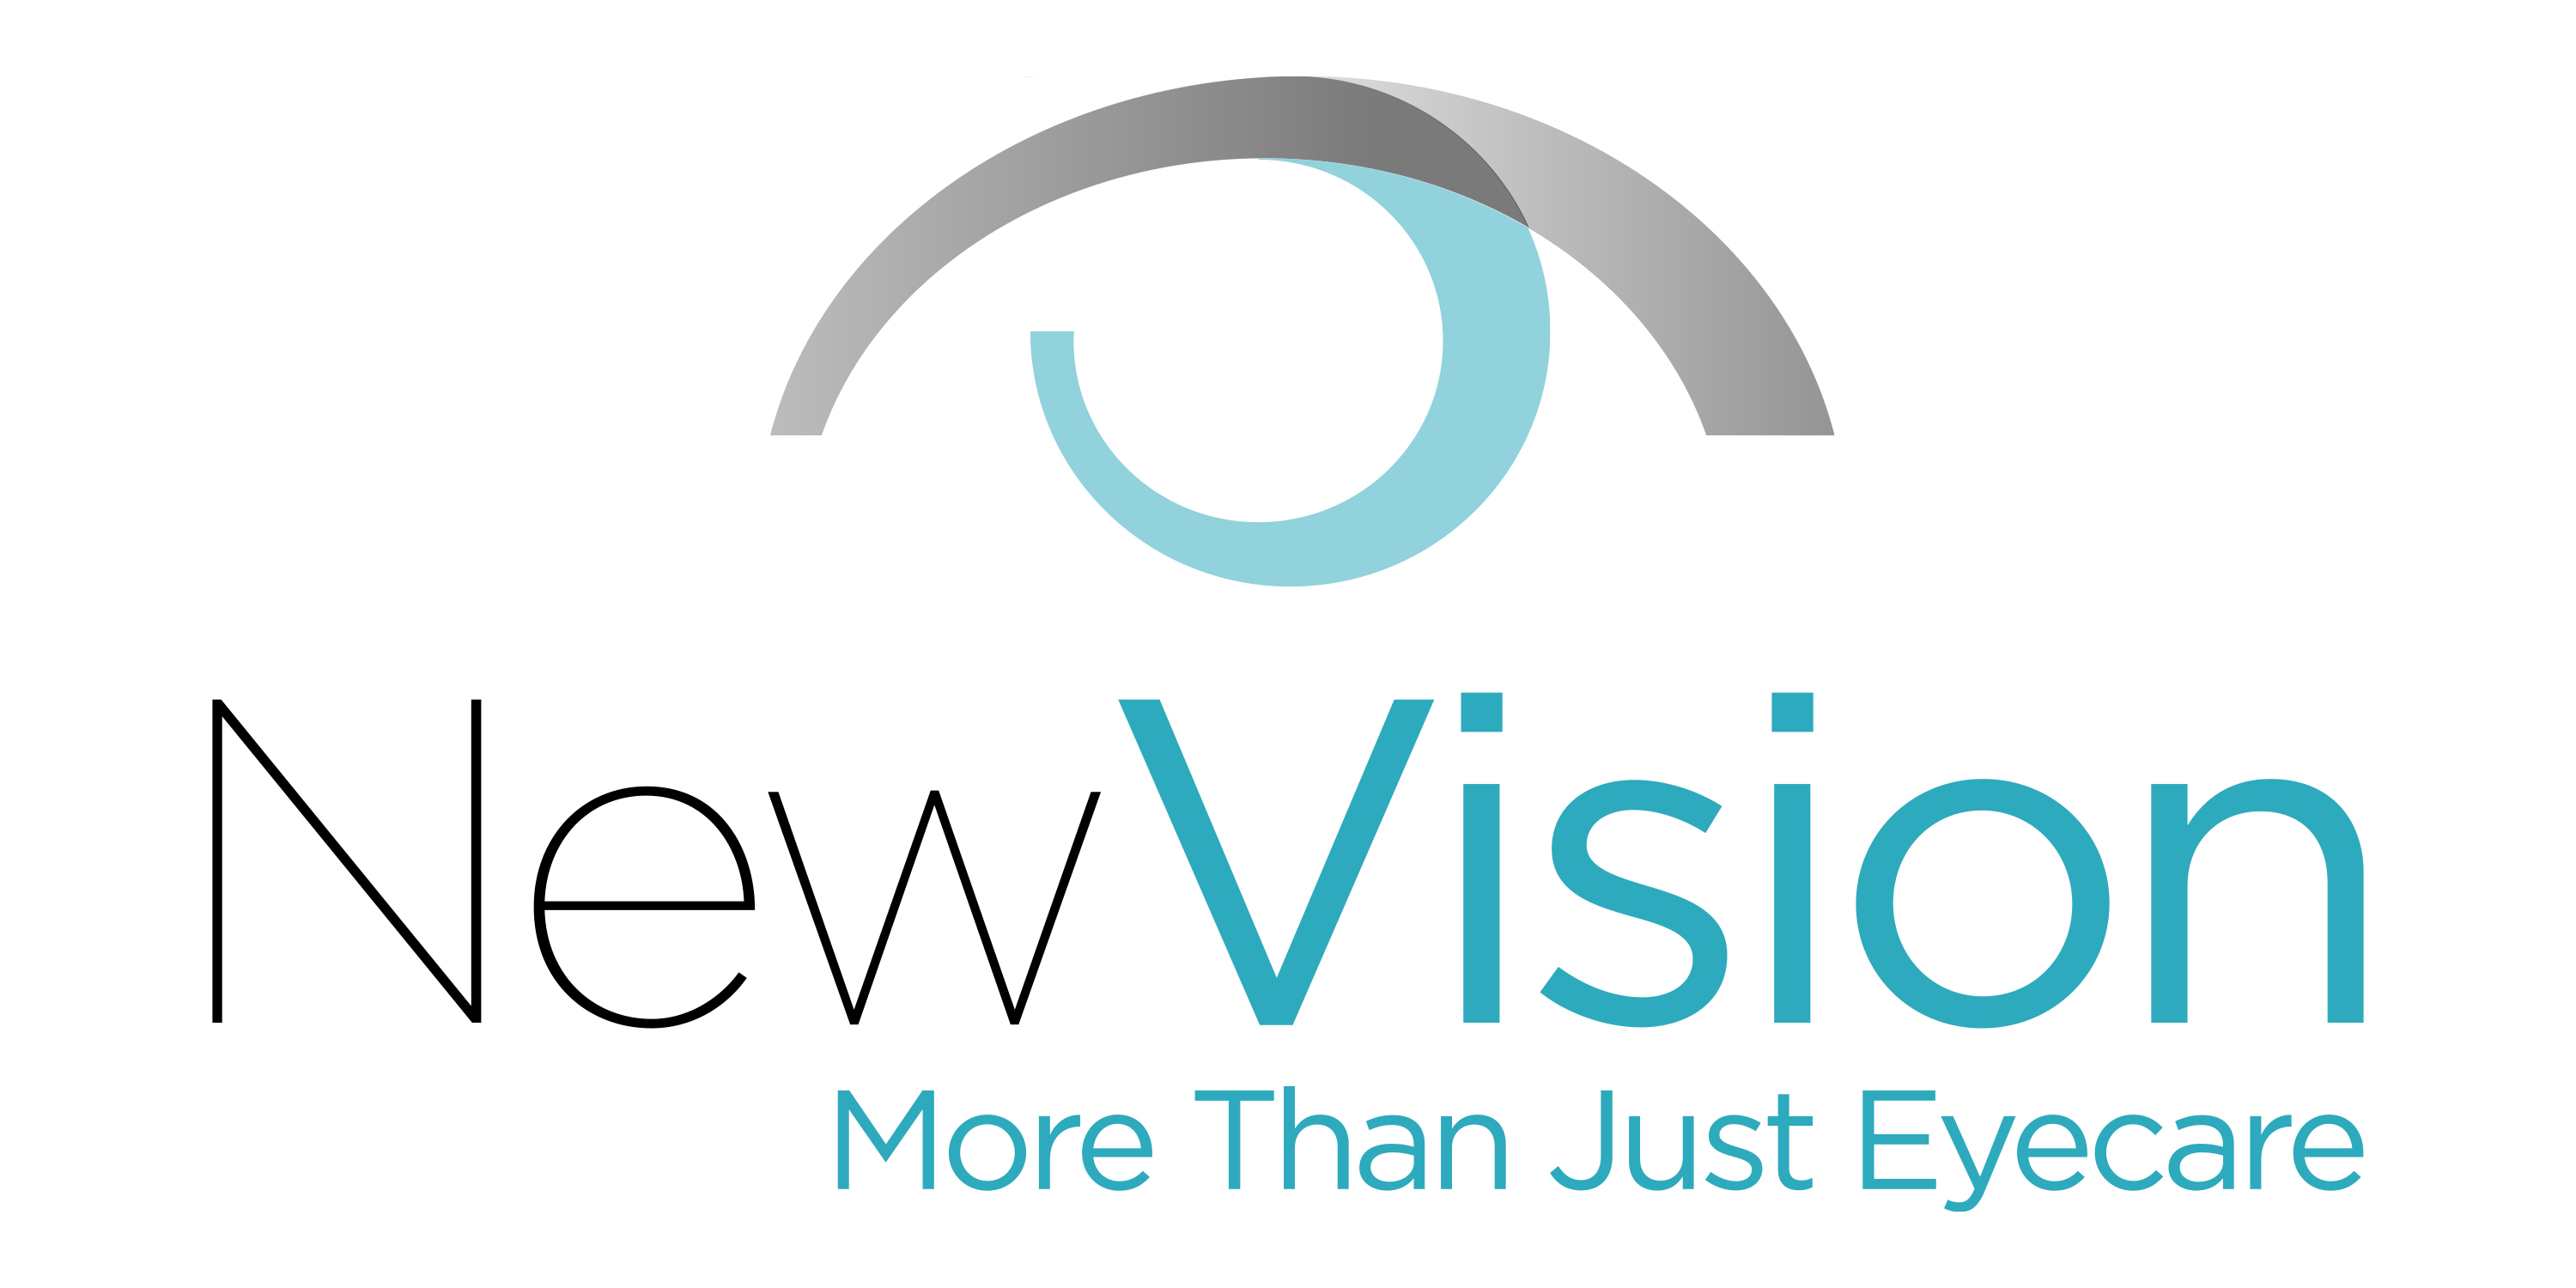 Optician Online - Thélios reveals new logo